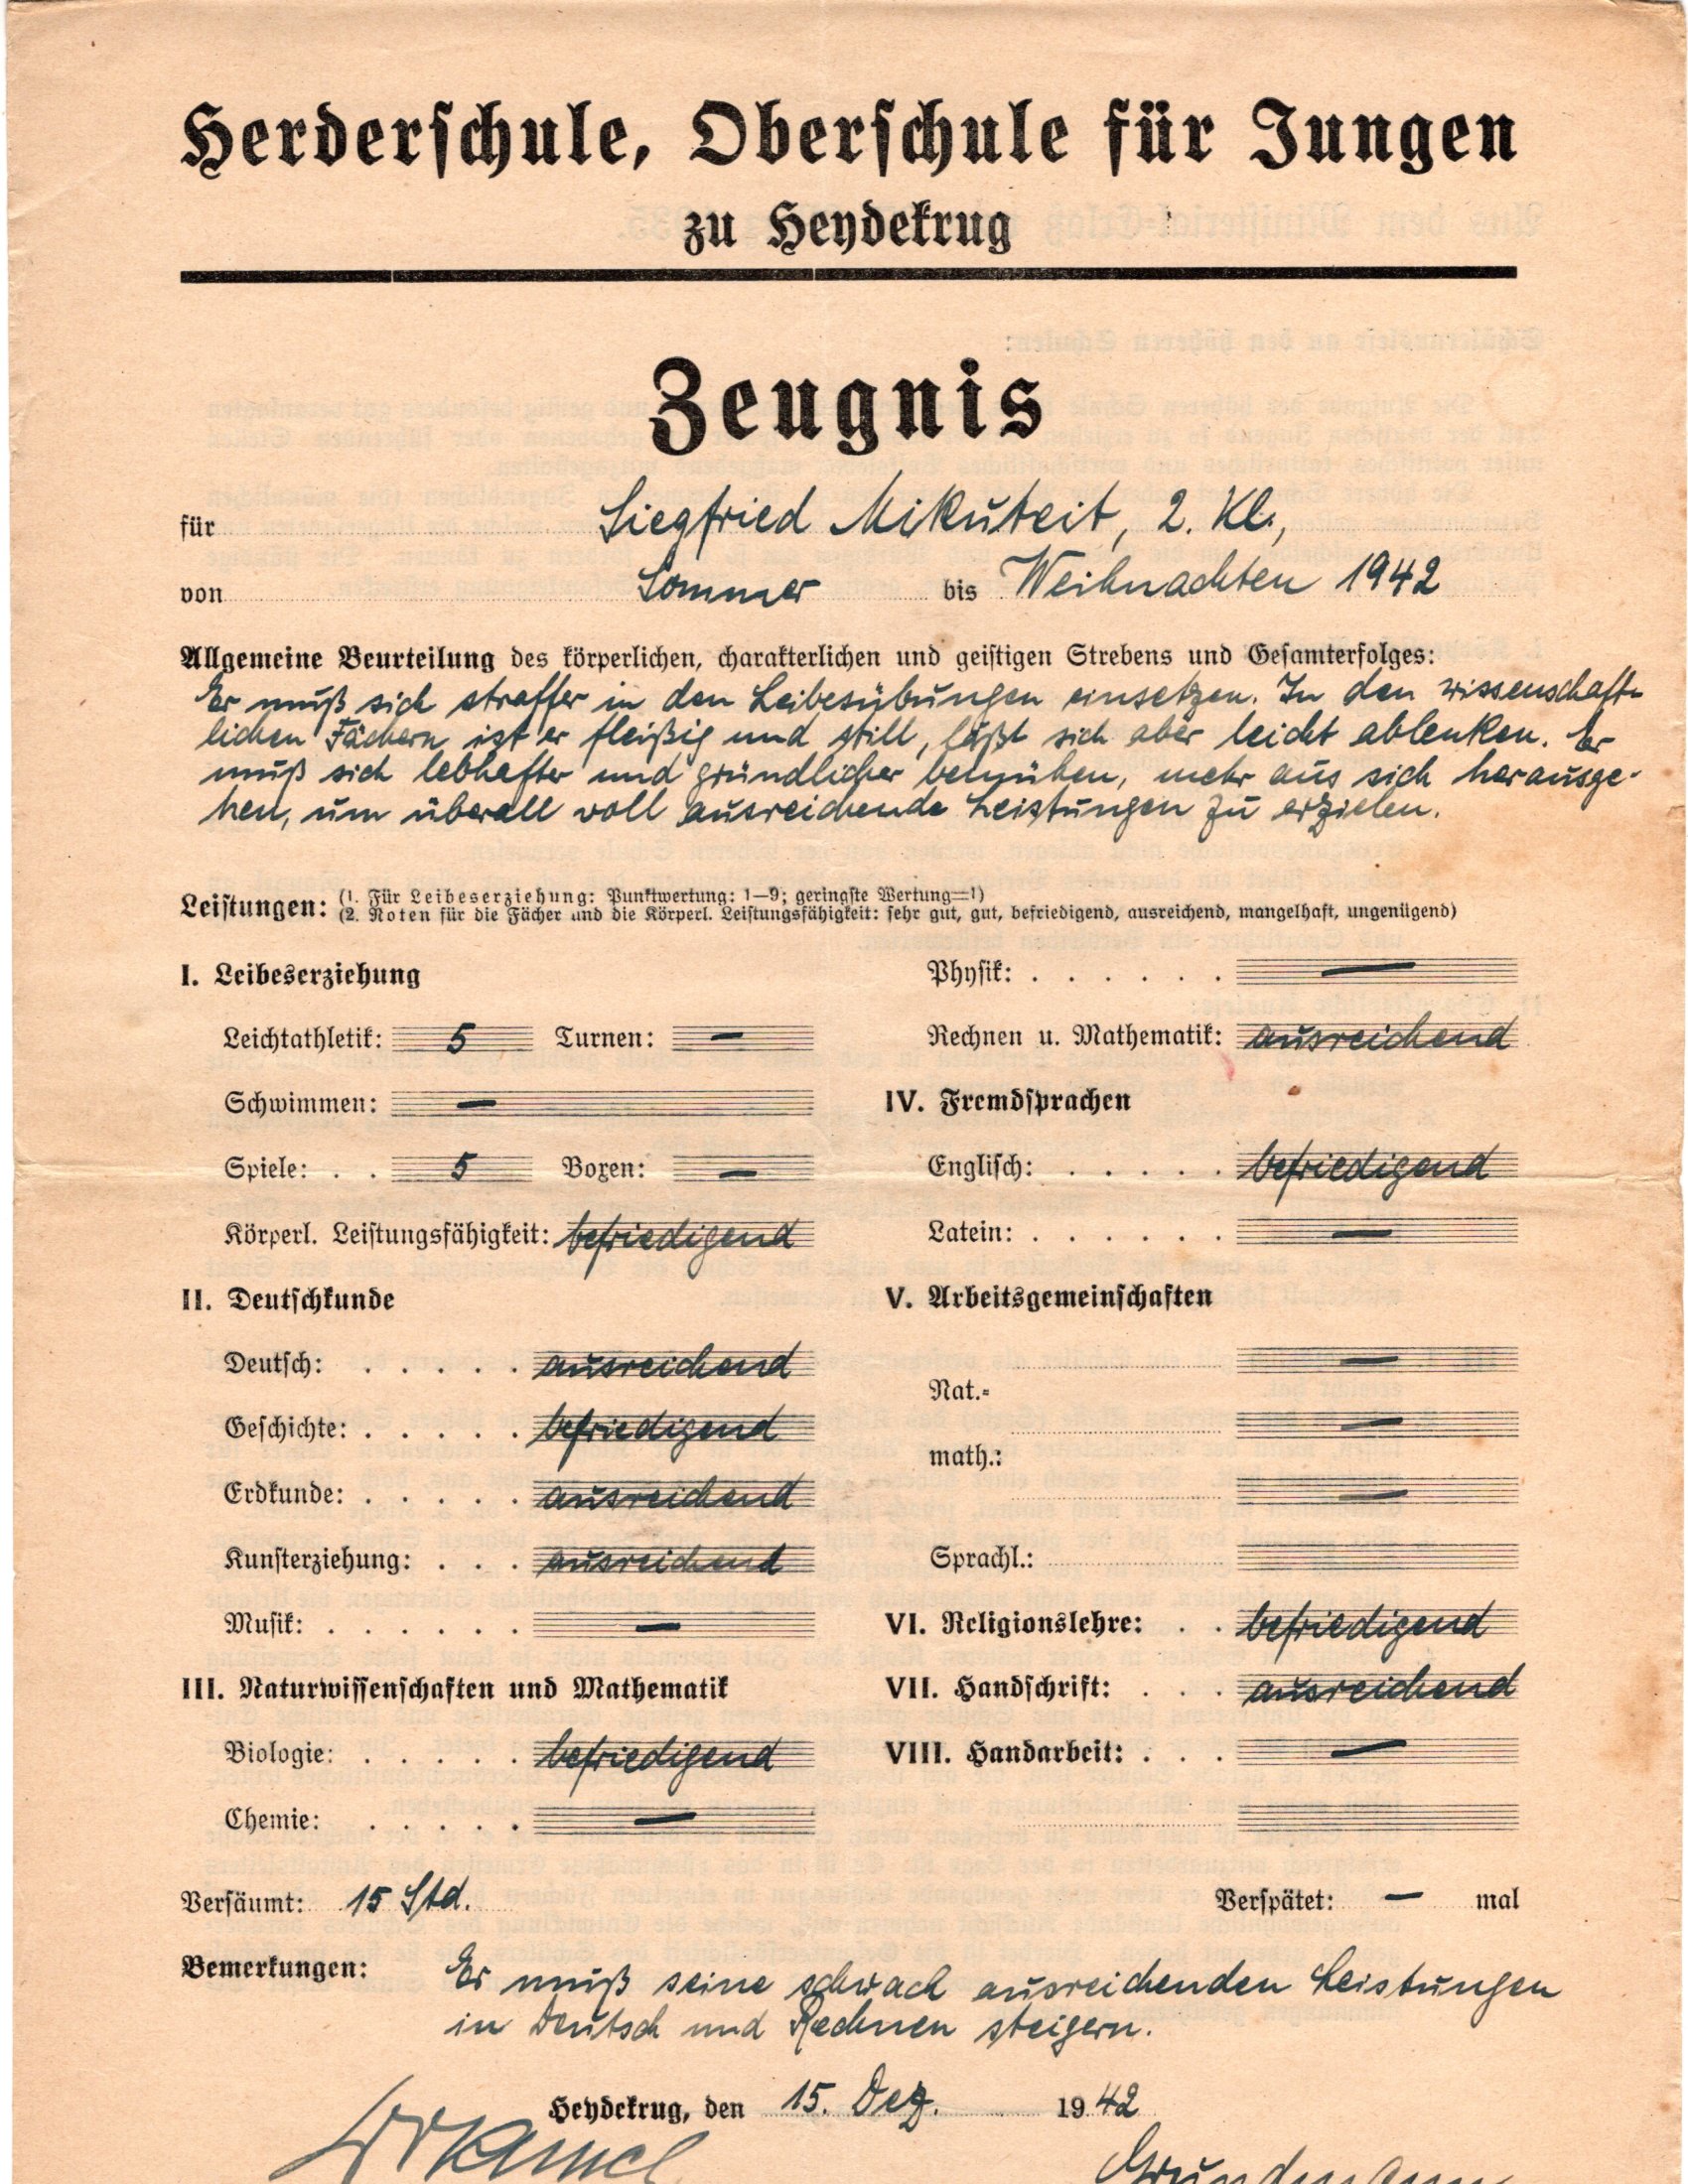 report card Weinachten 1942